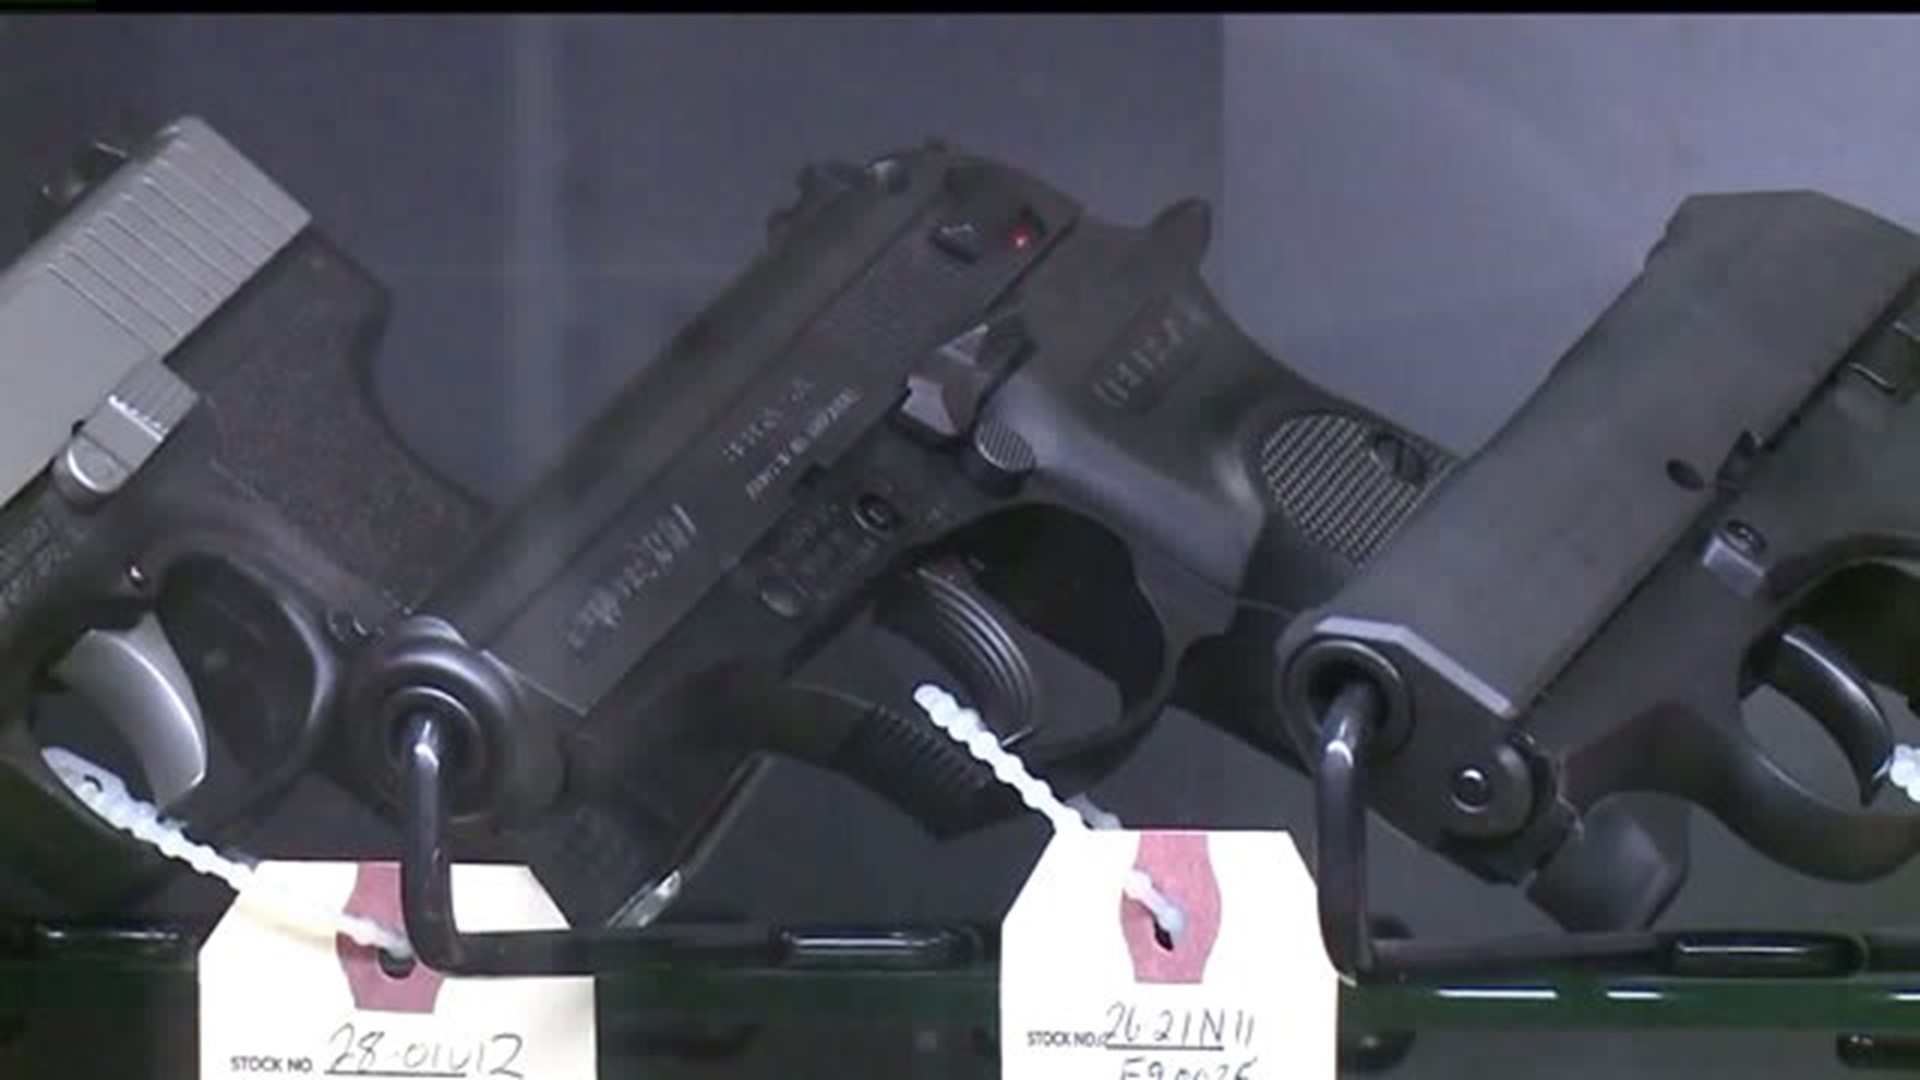 Gun Sales Rises After Shooting